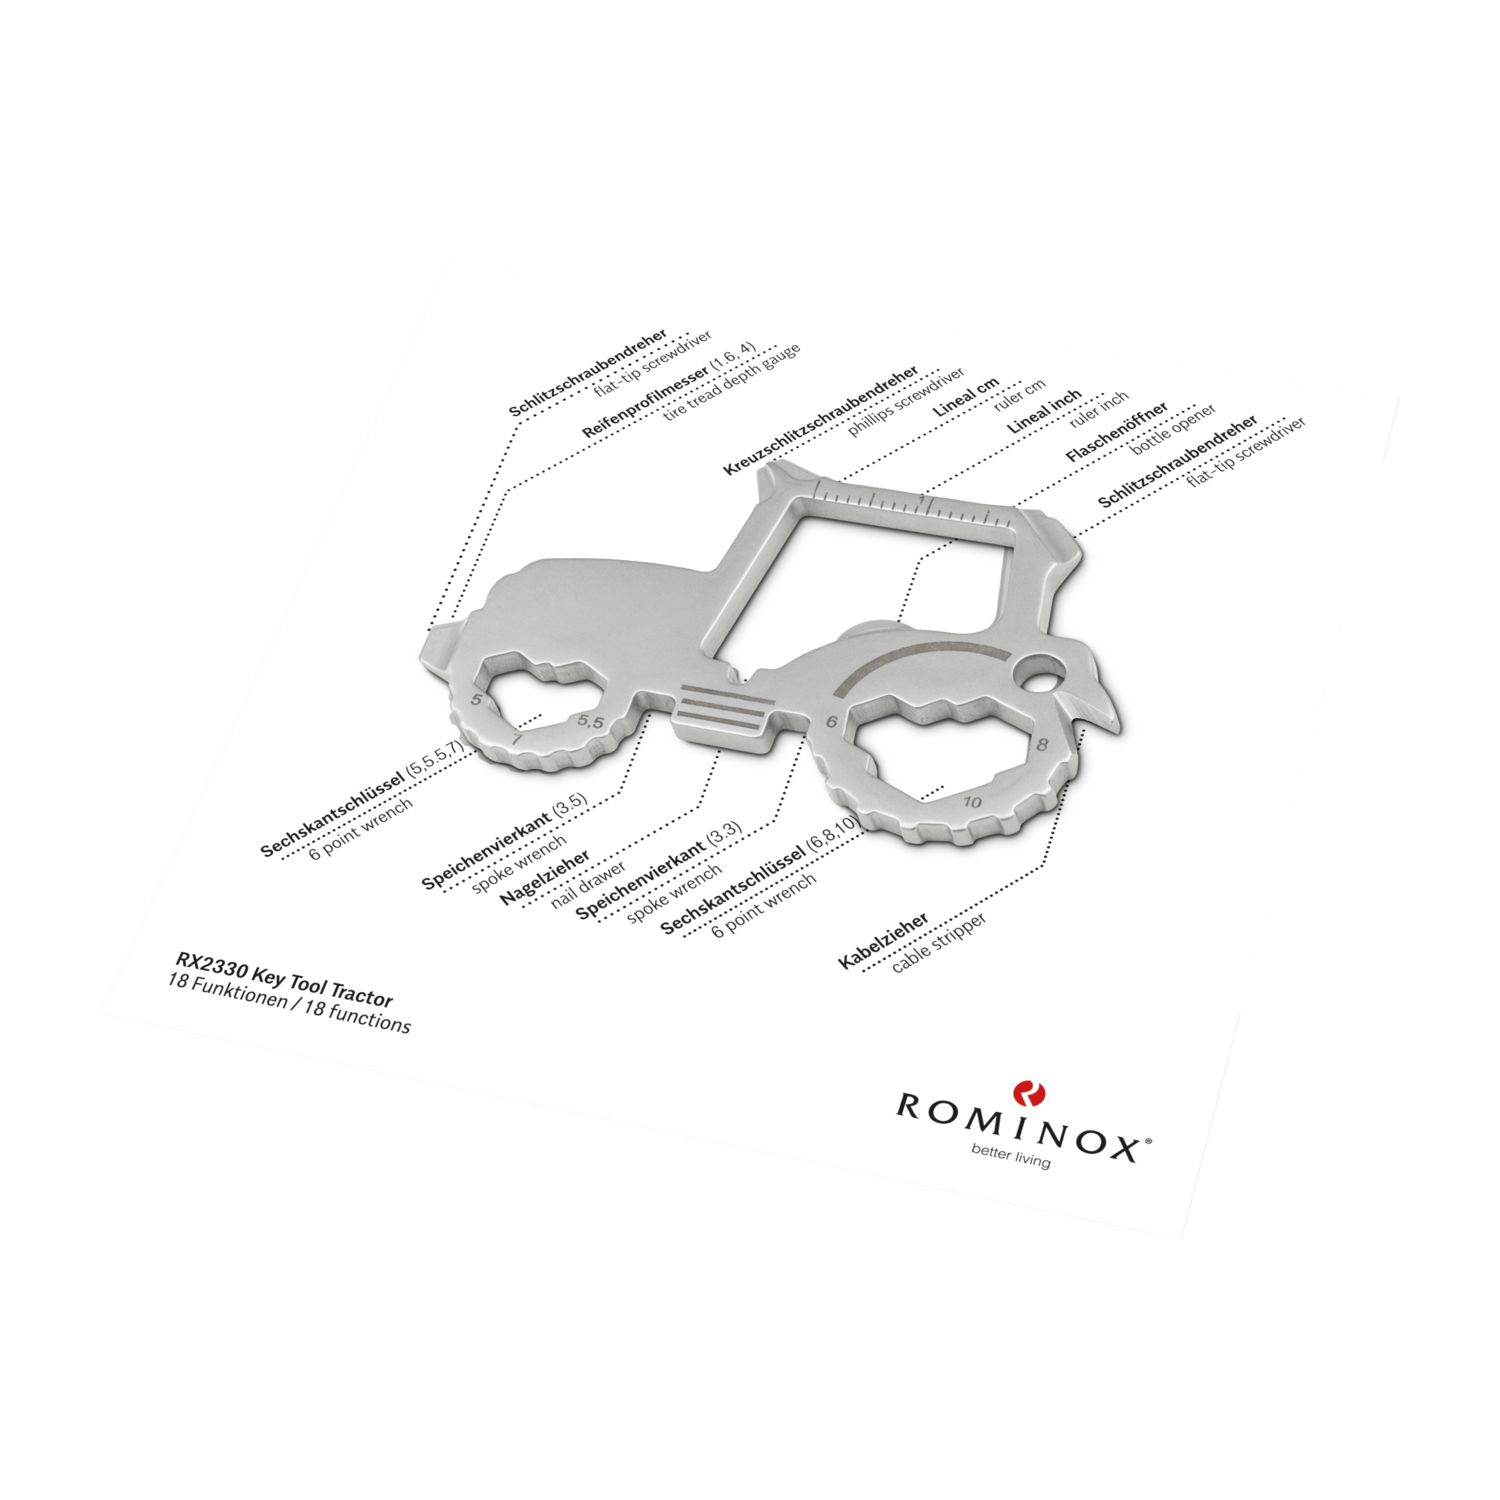 ROMINOX® Key Tool Car/Auto (18 Funktionen) Viel Glück 2K2109p